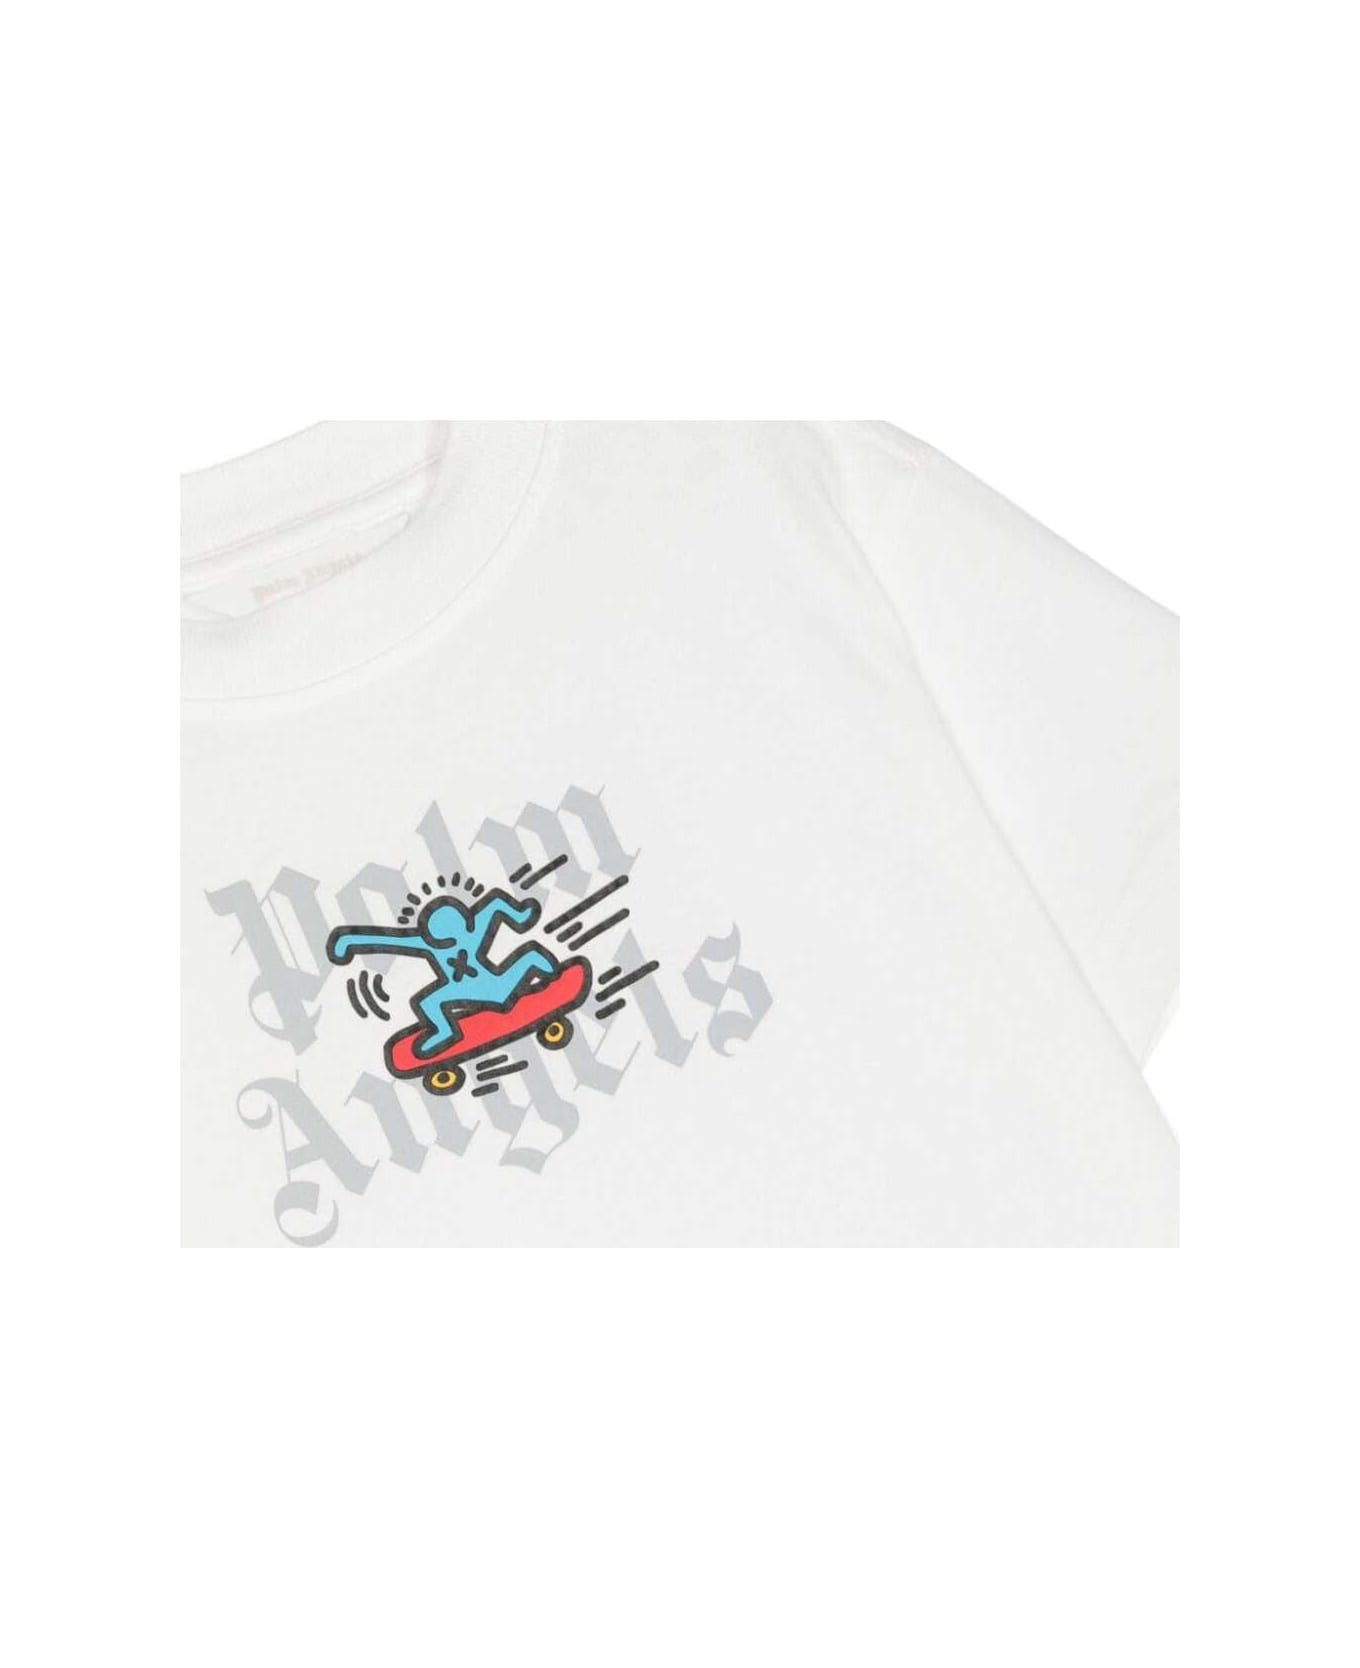 Palm Angels Pa X Kh Skateboard T-shirt Off White Bla - White